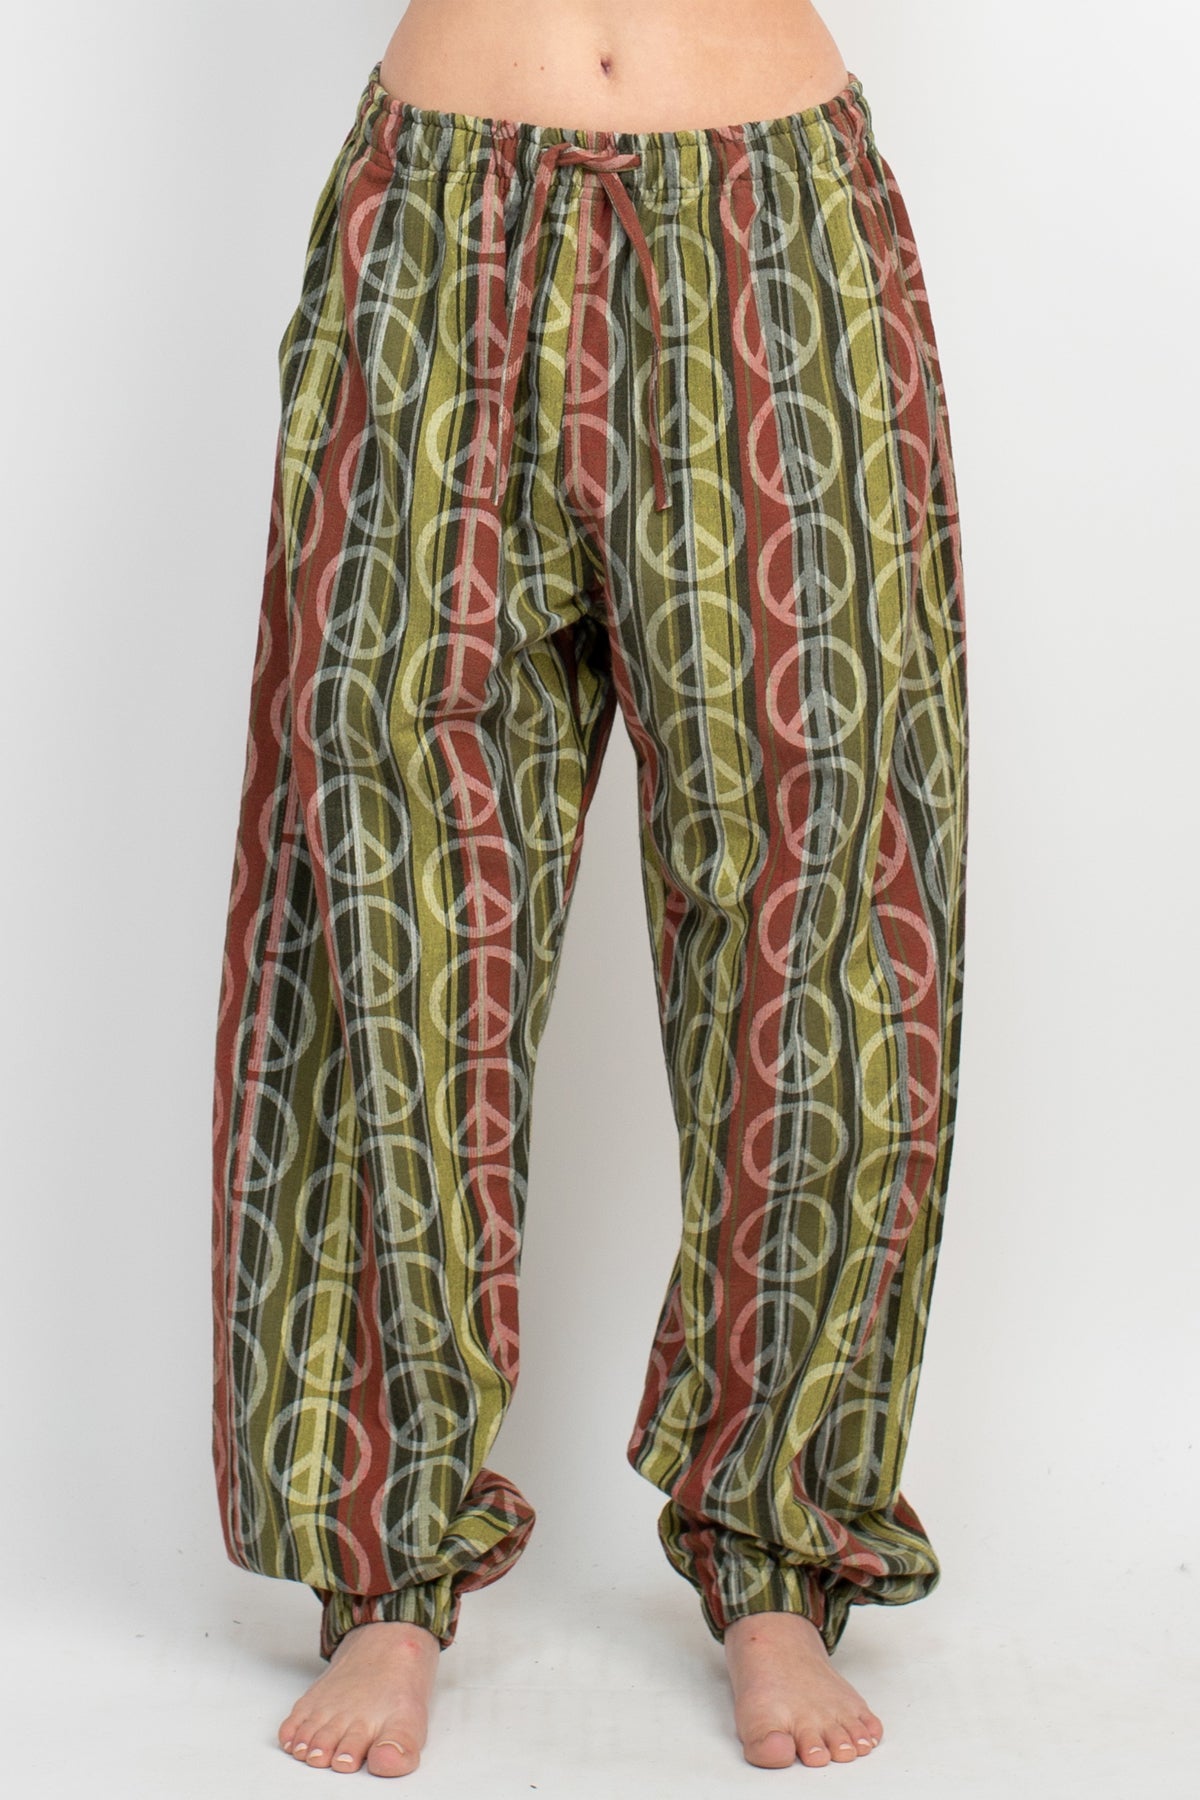 Women's Peace Sign Joggers - Stripe Drawstring Pants 60s 70s